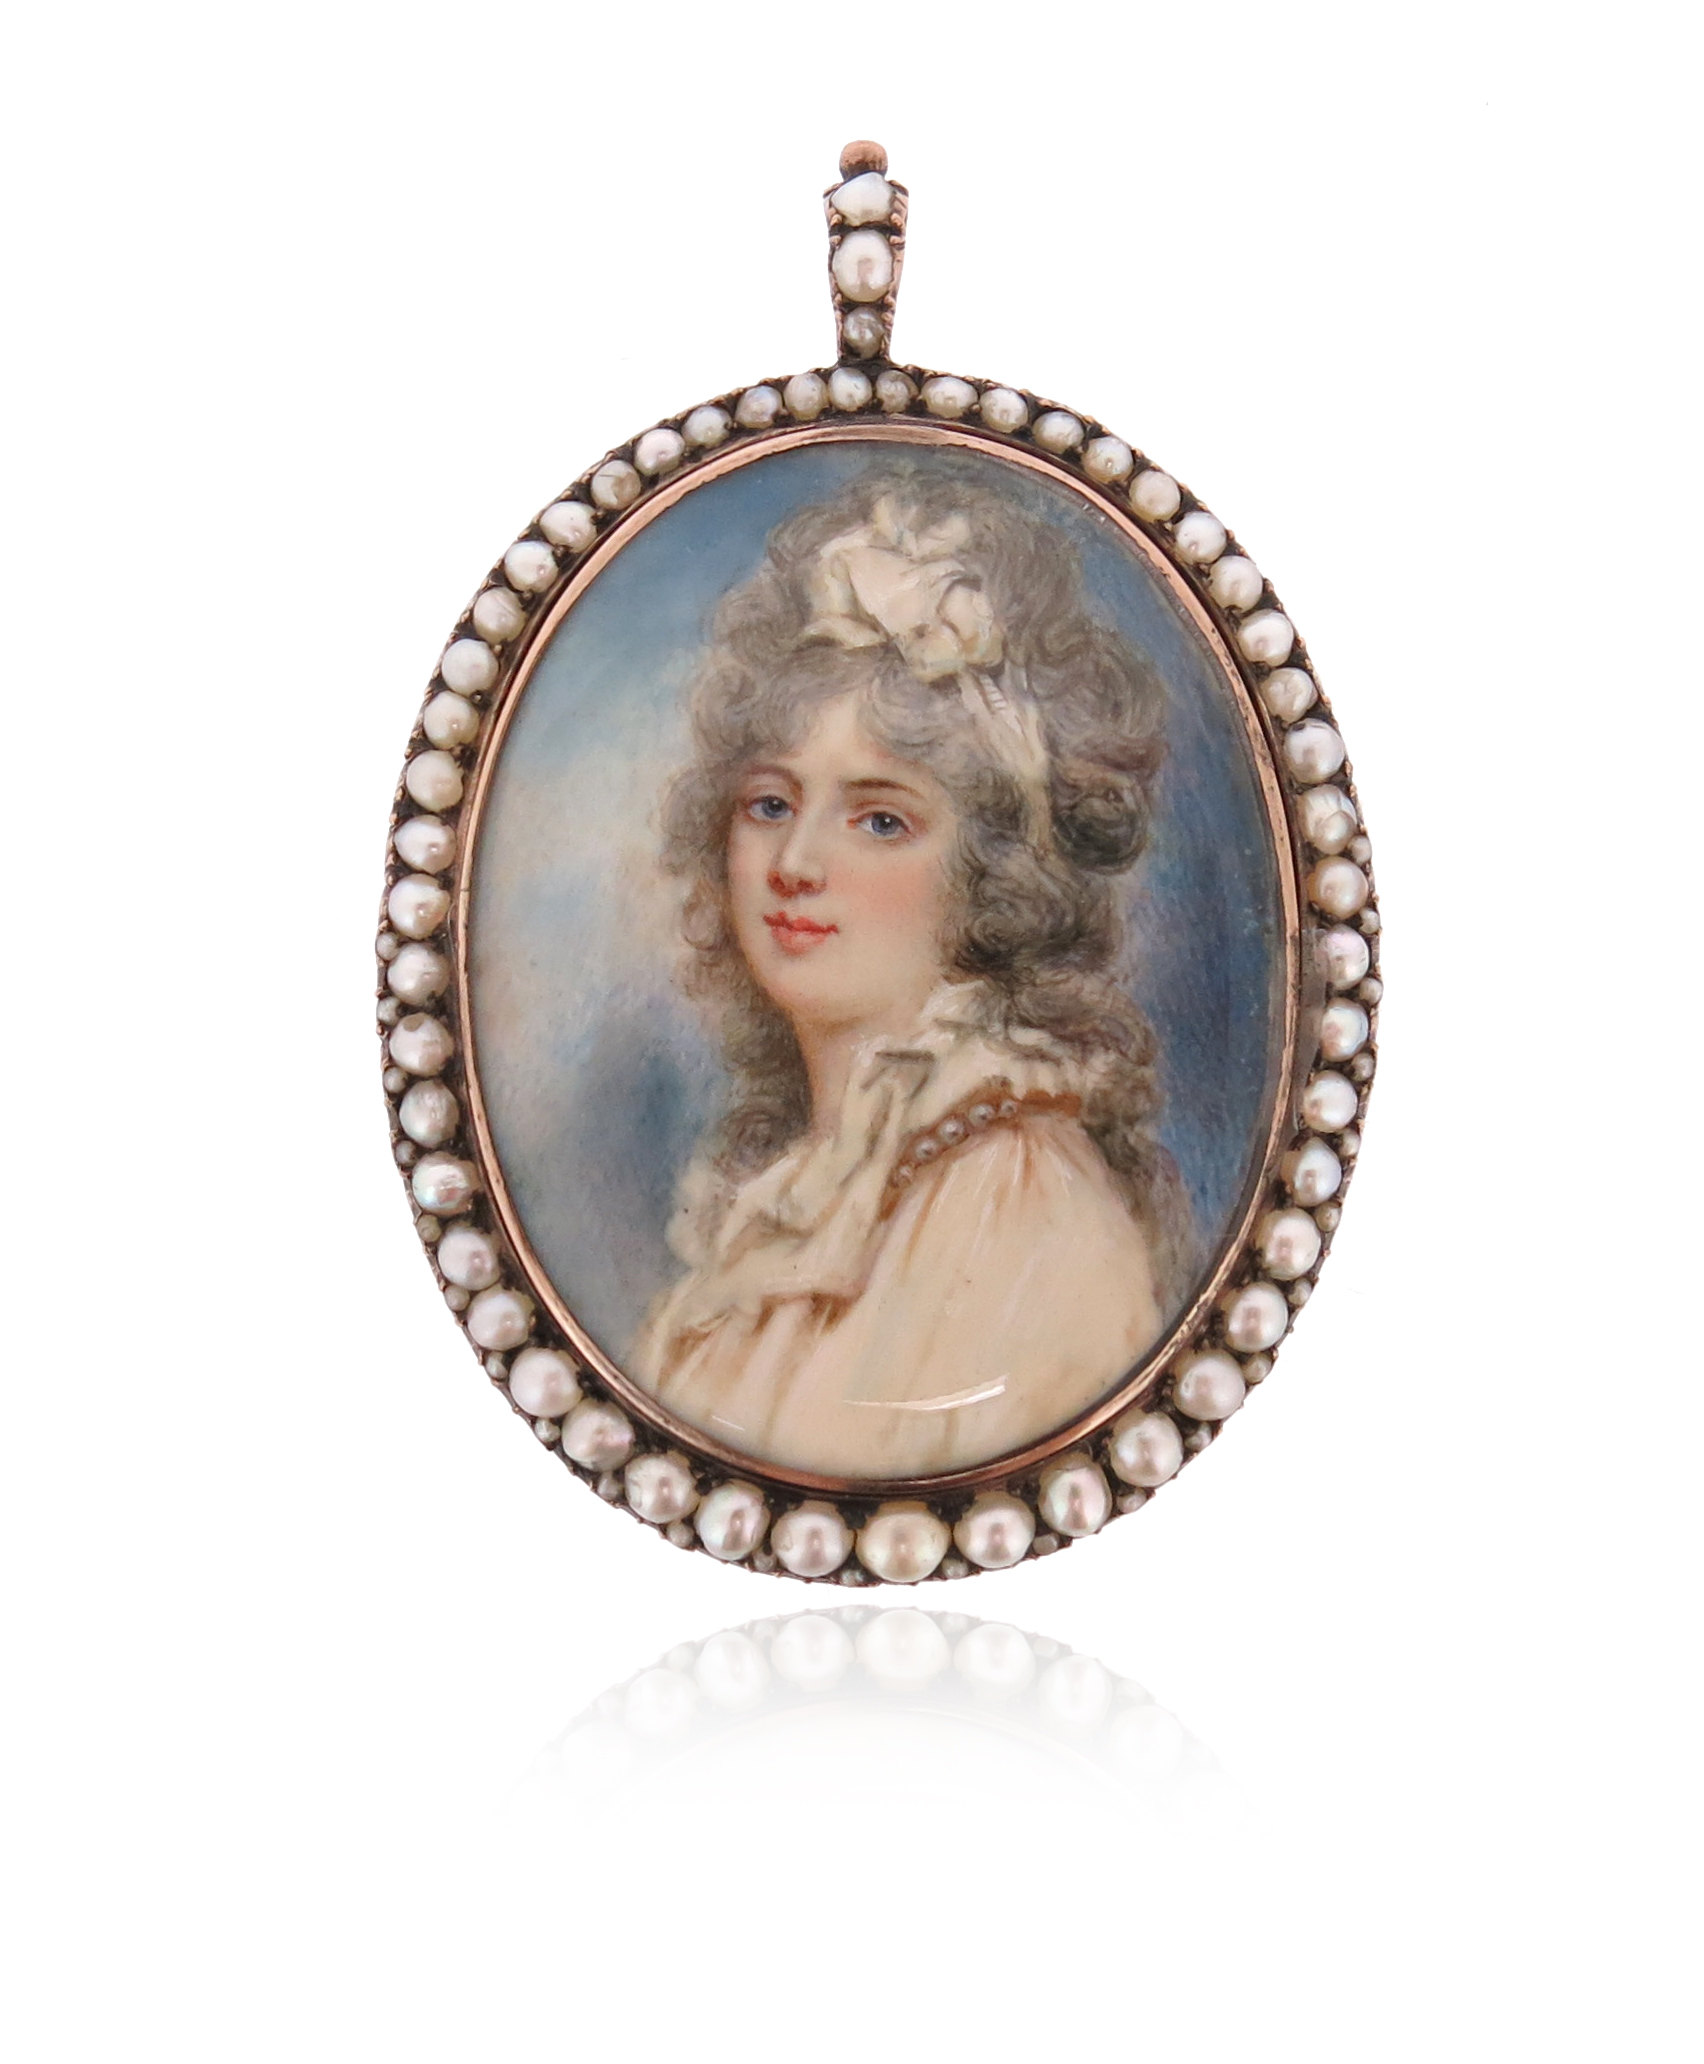 An early 19th century portrait miniature locket pendant, the miniature depicting a portrait of a